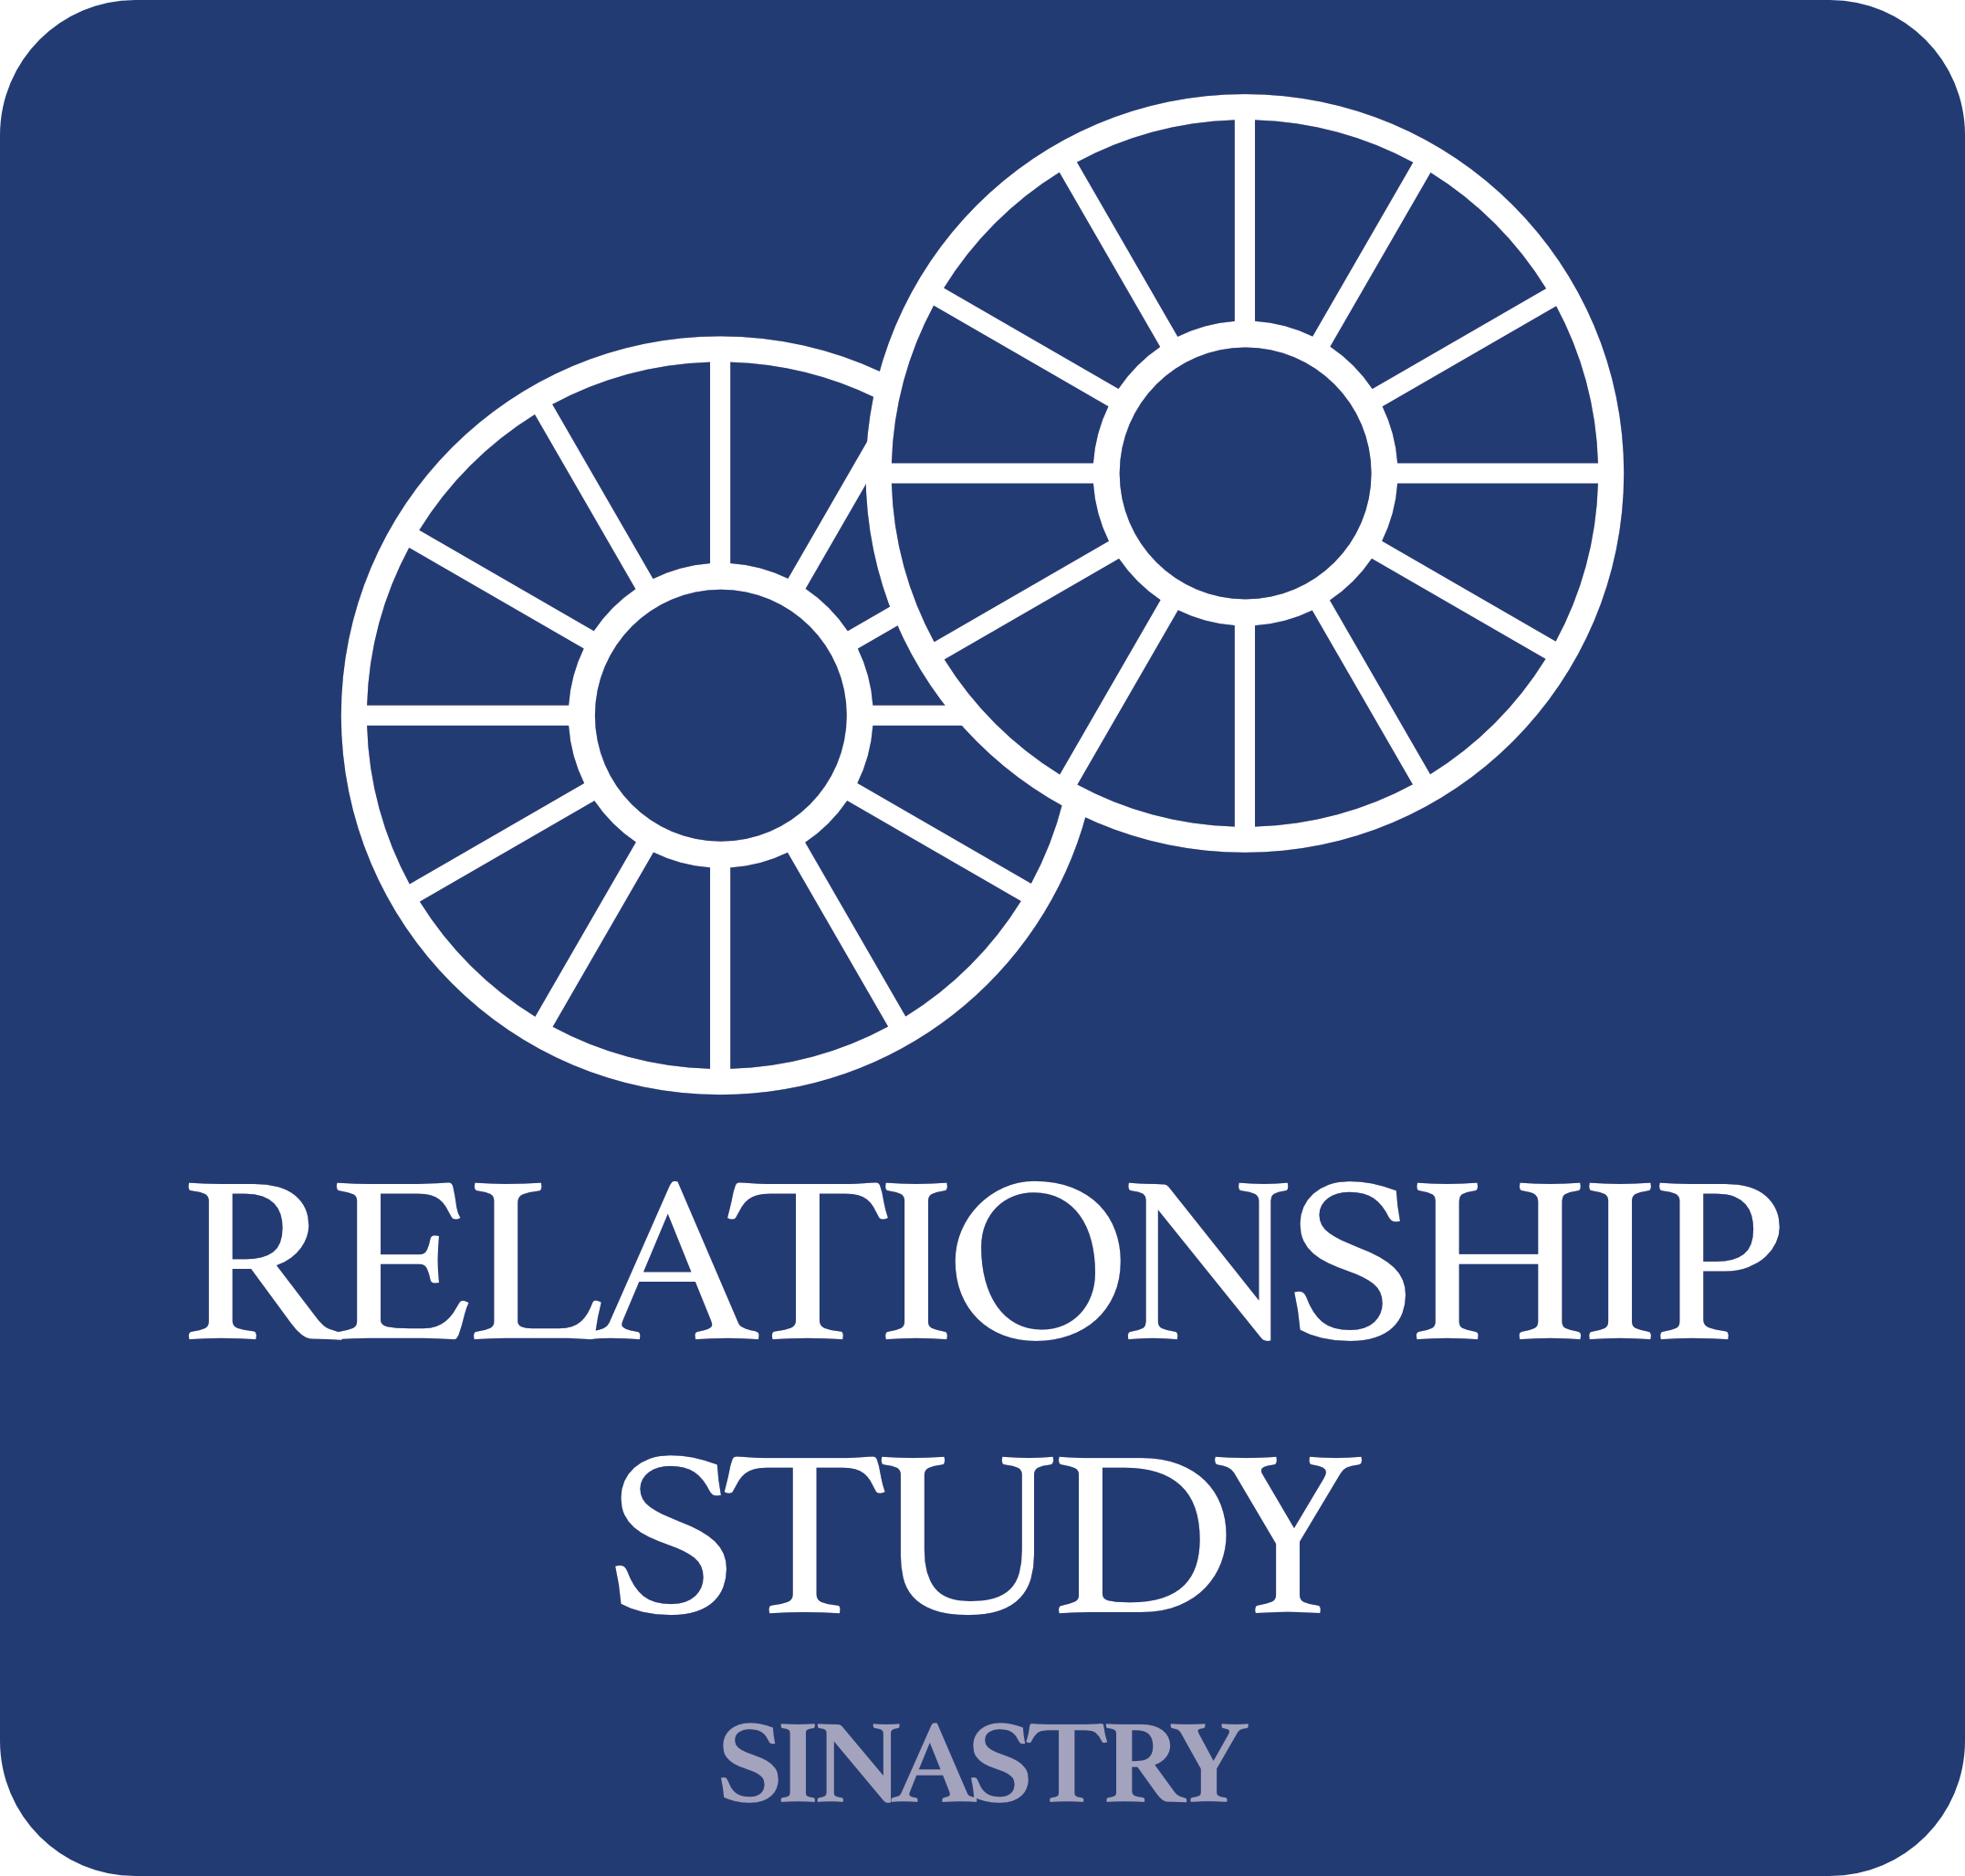 Relationship Study (Sinastry)